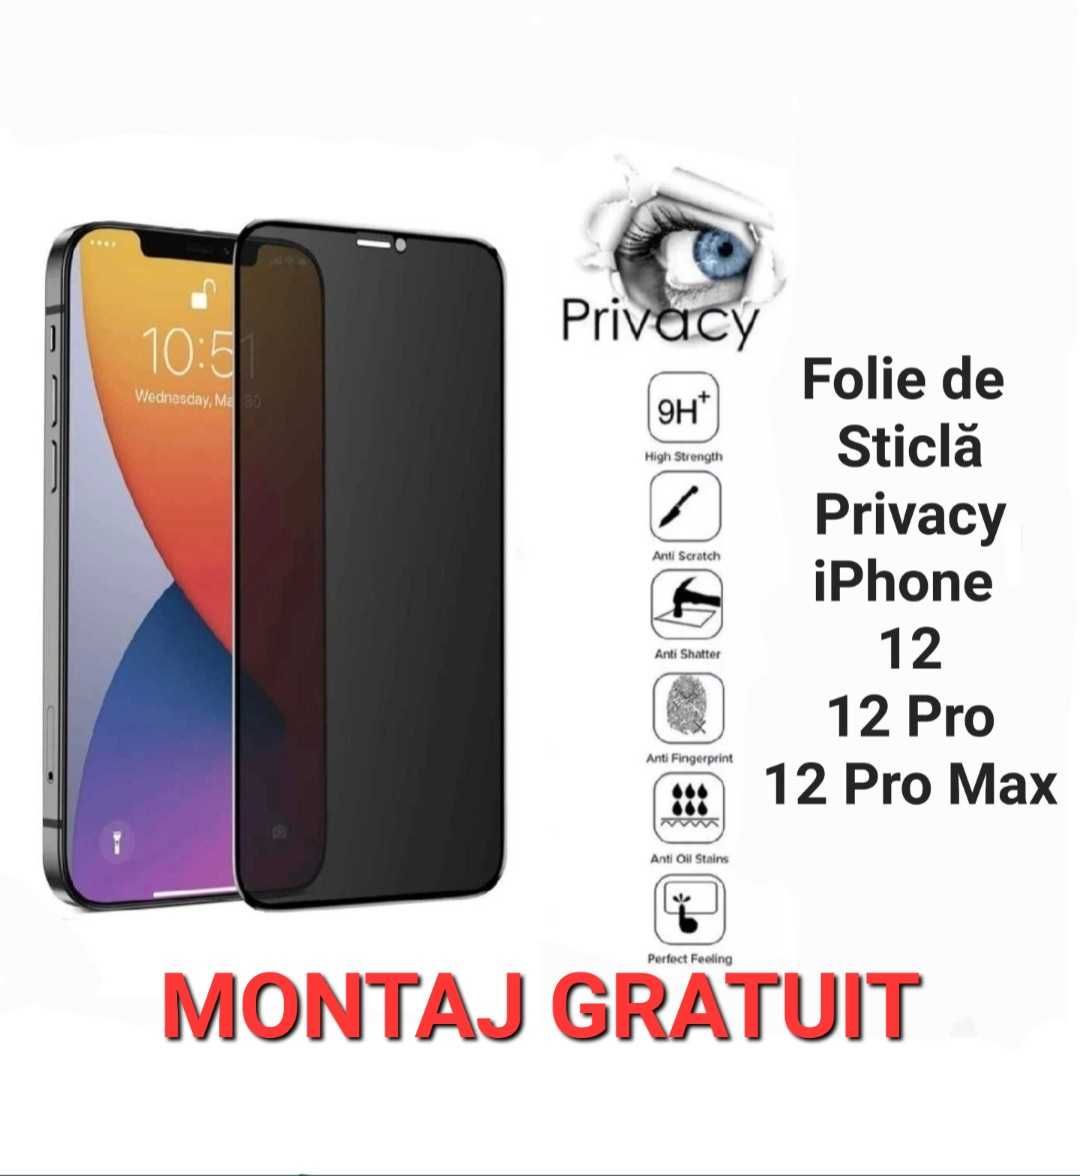 Folie Sticla Privacy Full iPhone 13 / Pro / Pro Max / 14 Plus